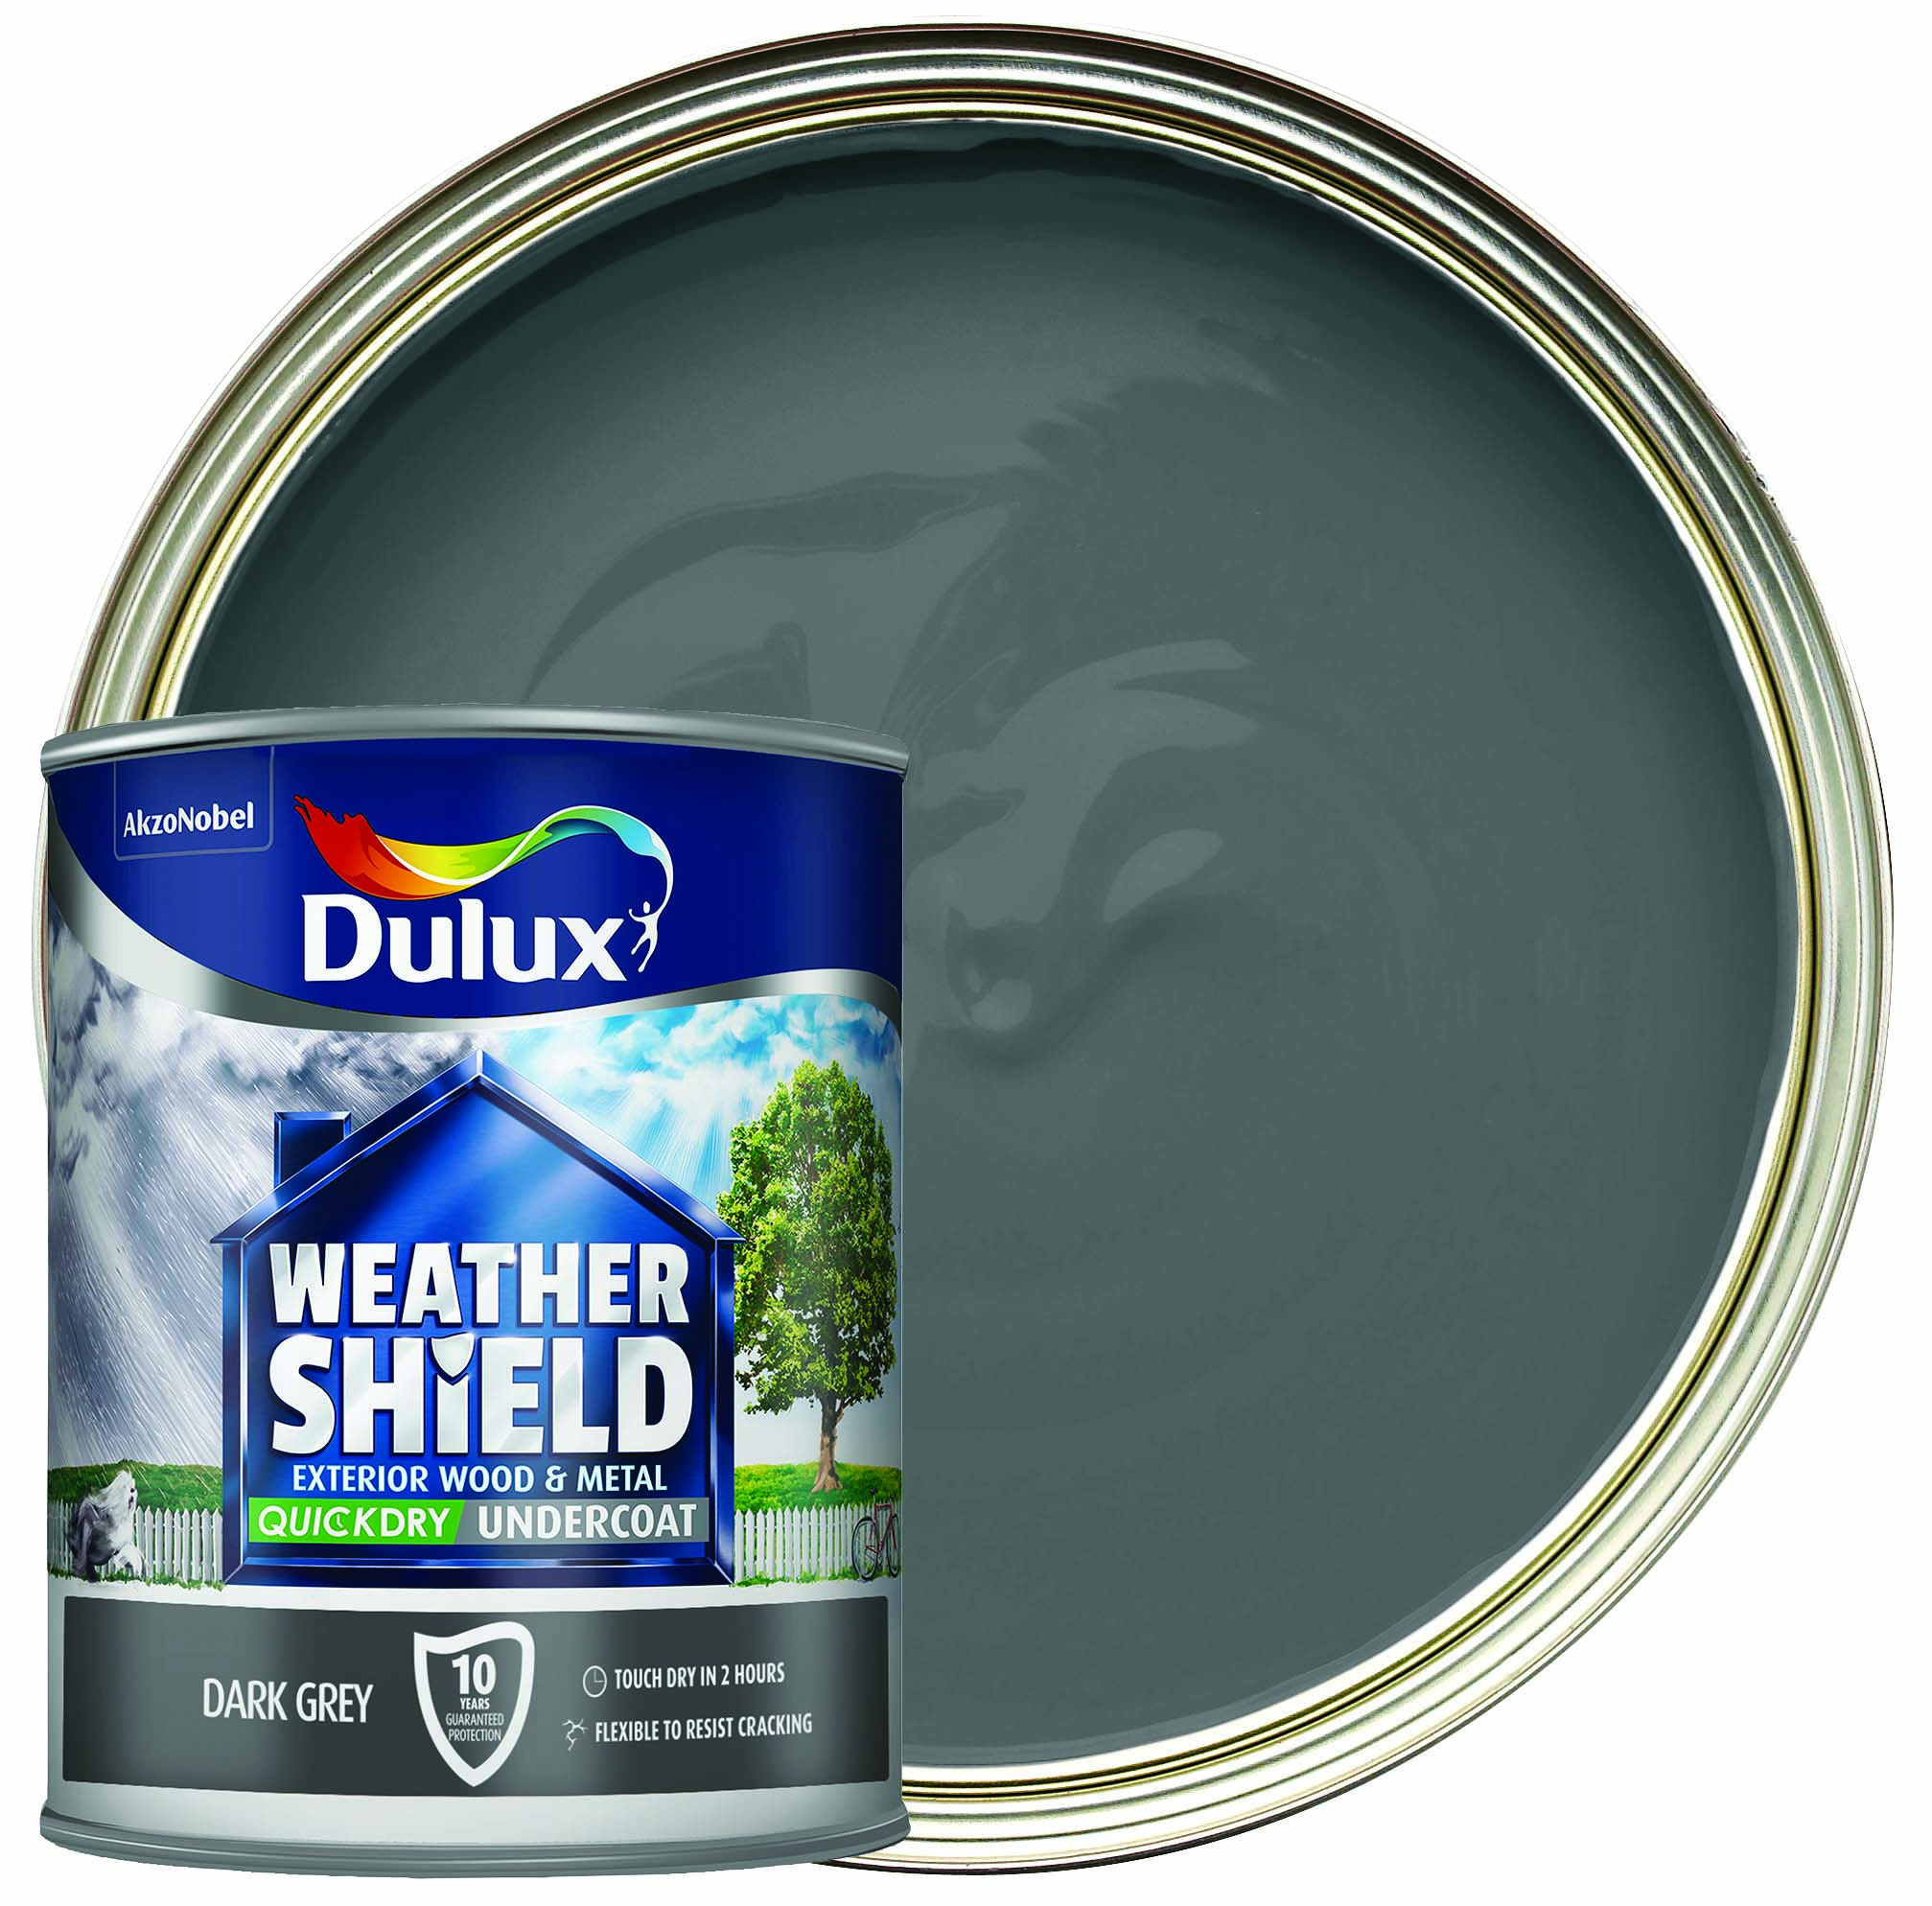 Dulux Weathershield Quick Dry Undercoat Paint - Dark Grey - 750ml